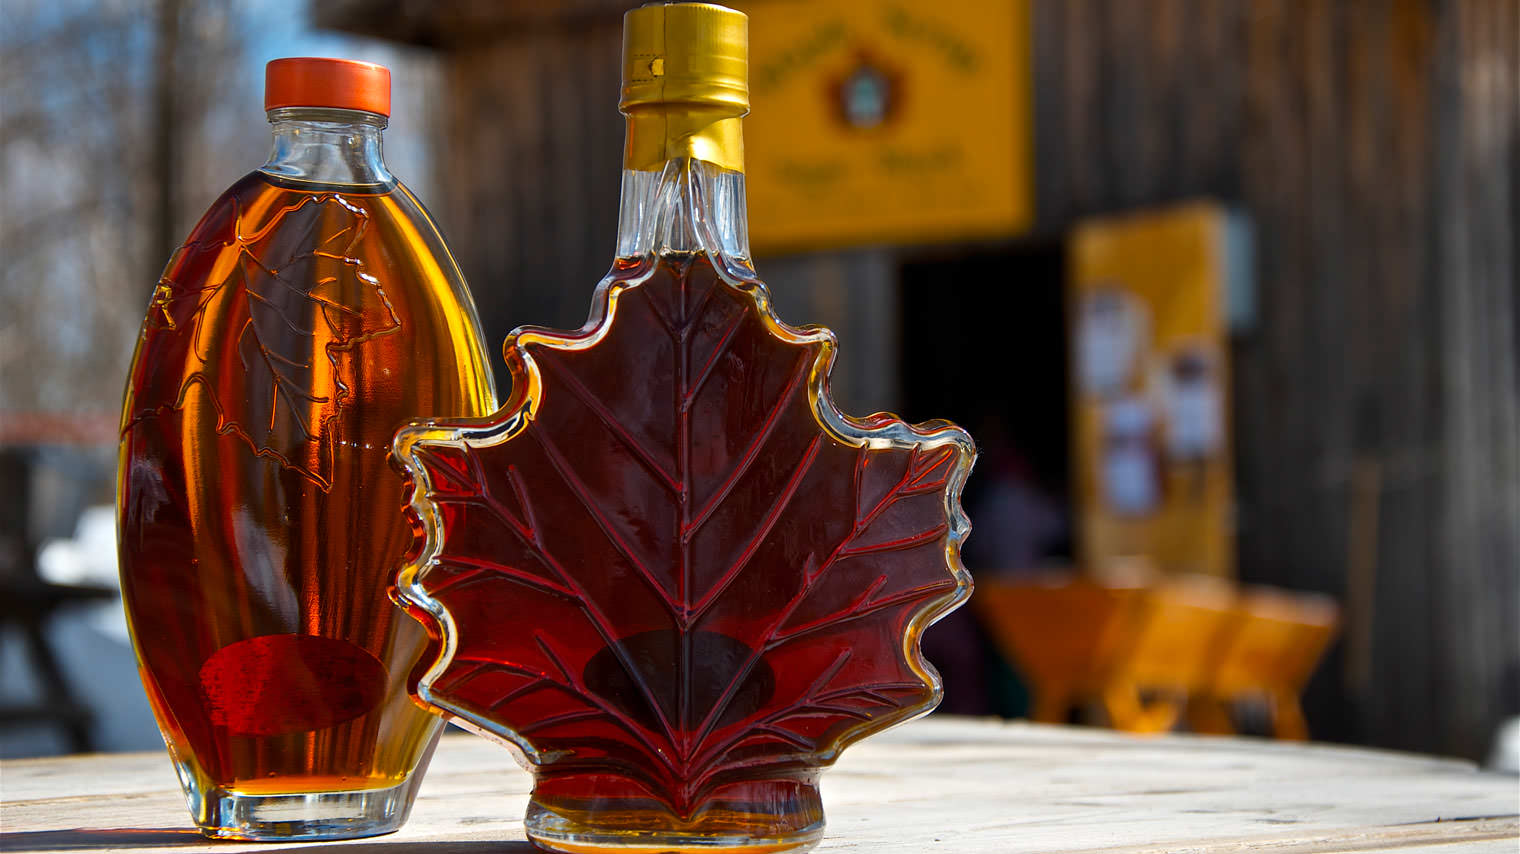 4 Ontario Family Maple Syrup Experiences